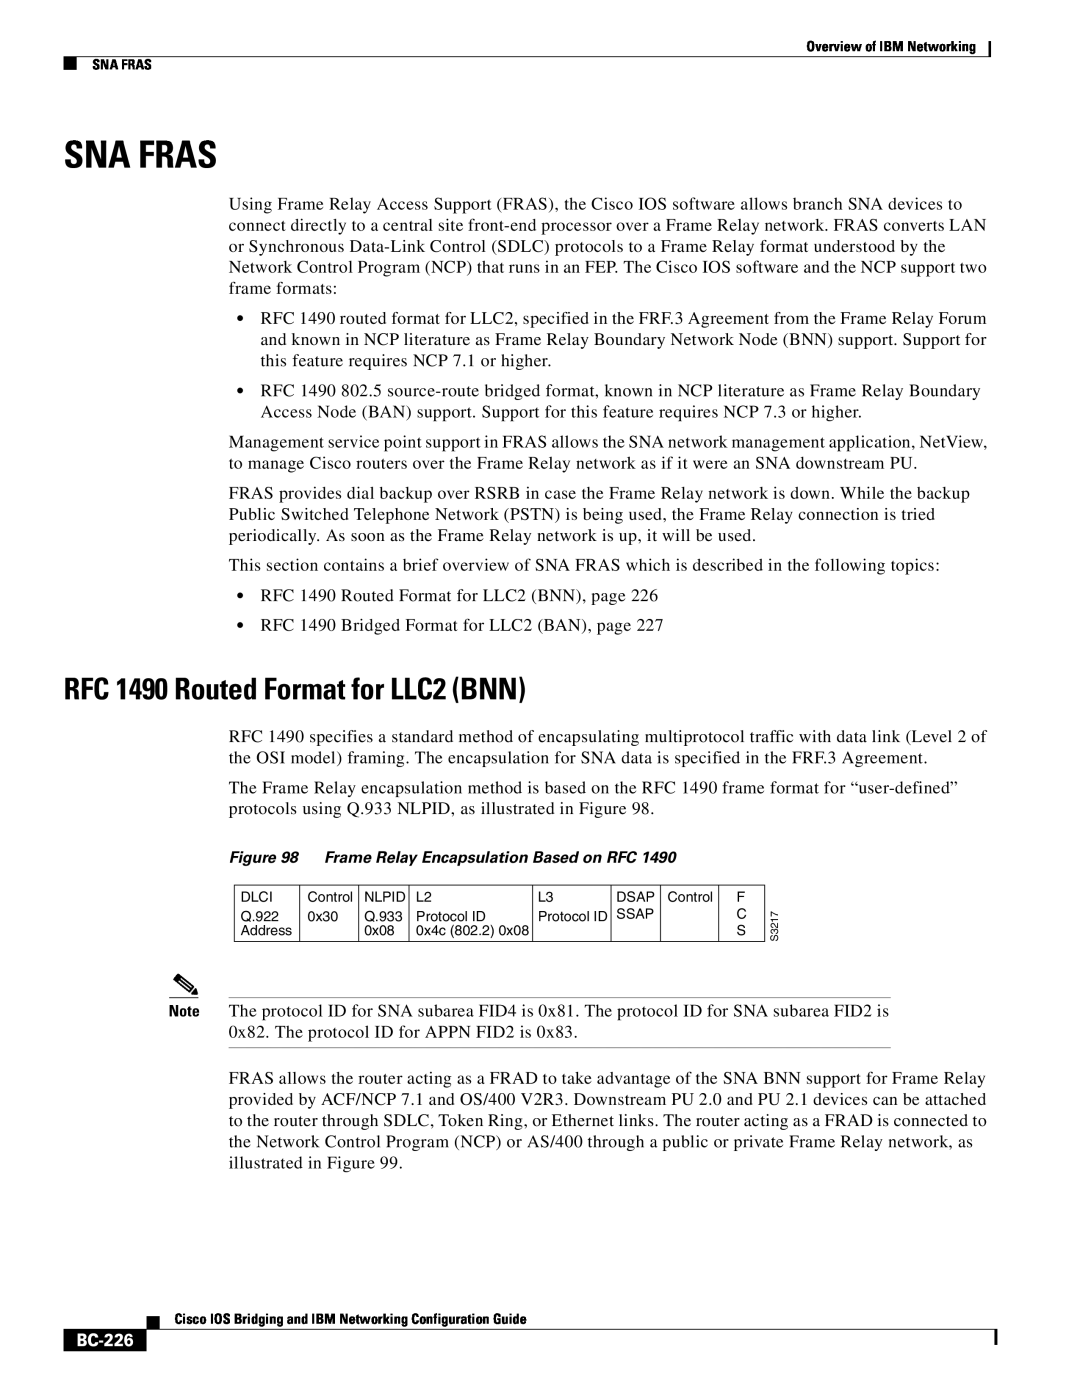 IBM BC-203 manual Sna Fras, RFC 1490 Routed Format for LLC2 BNN, BC-226 